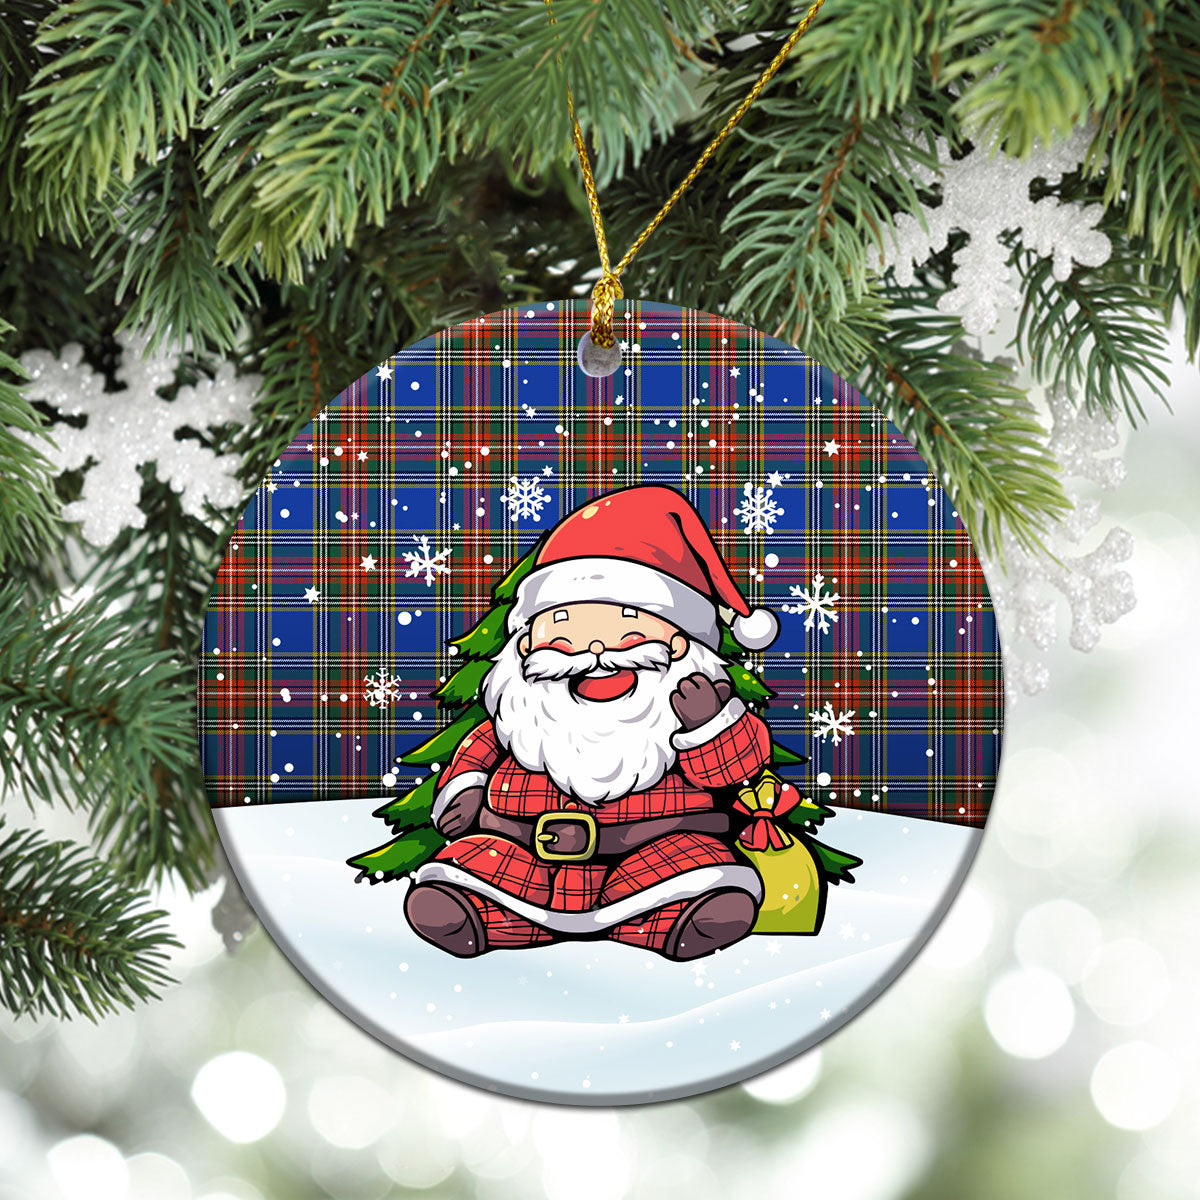 Bethune Ancient Tartan Christmas Ceramic Ornament - Scottish Santa Style